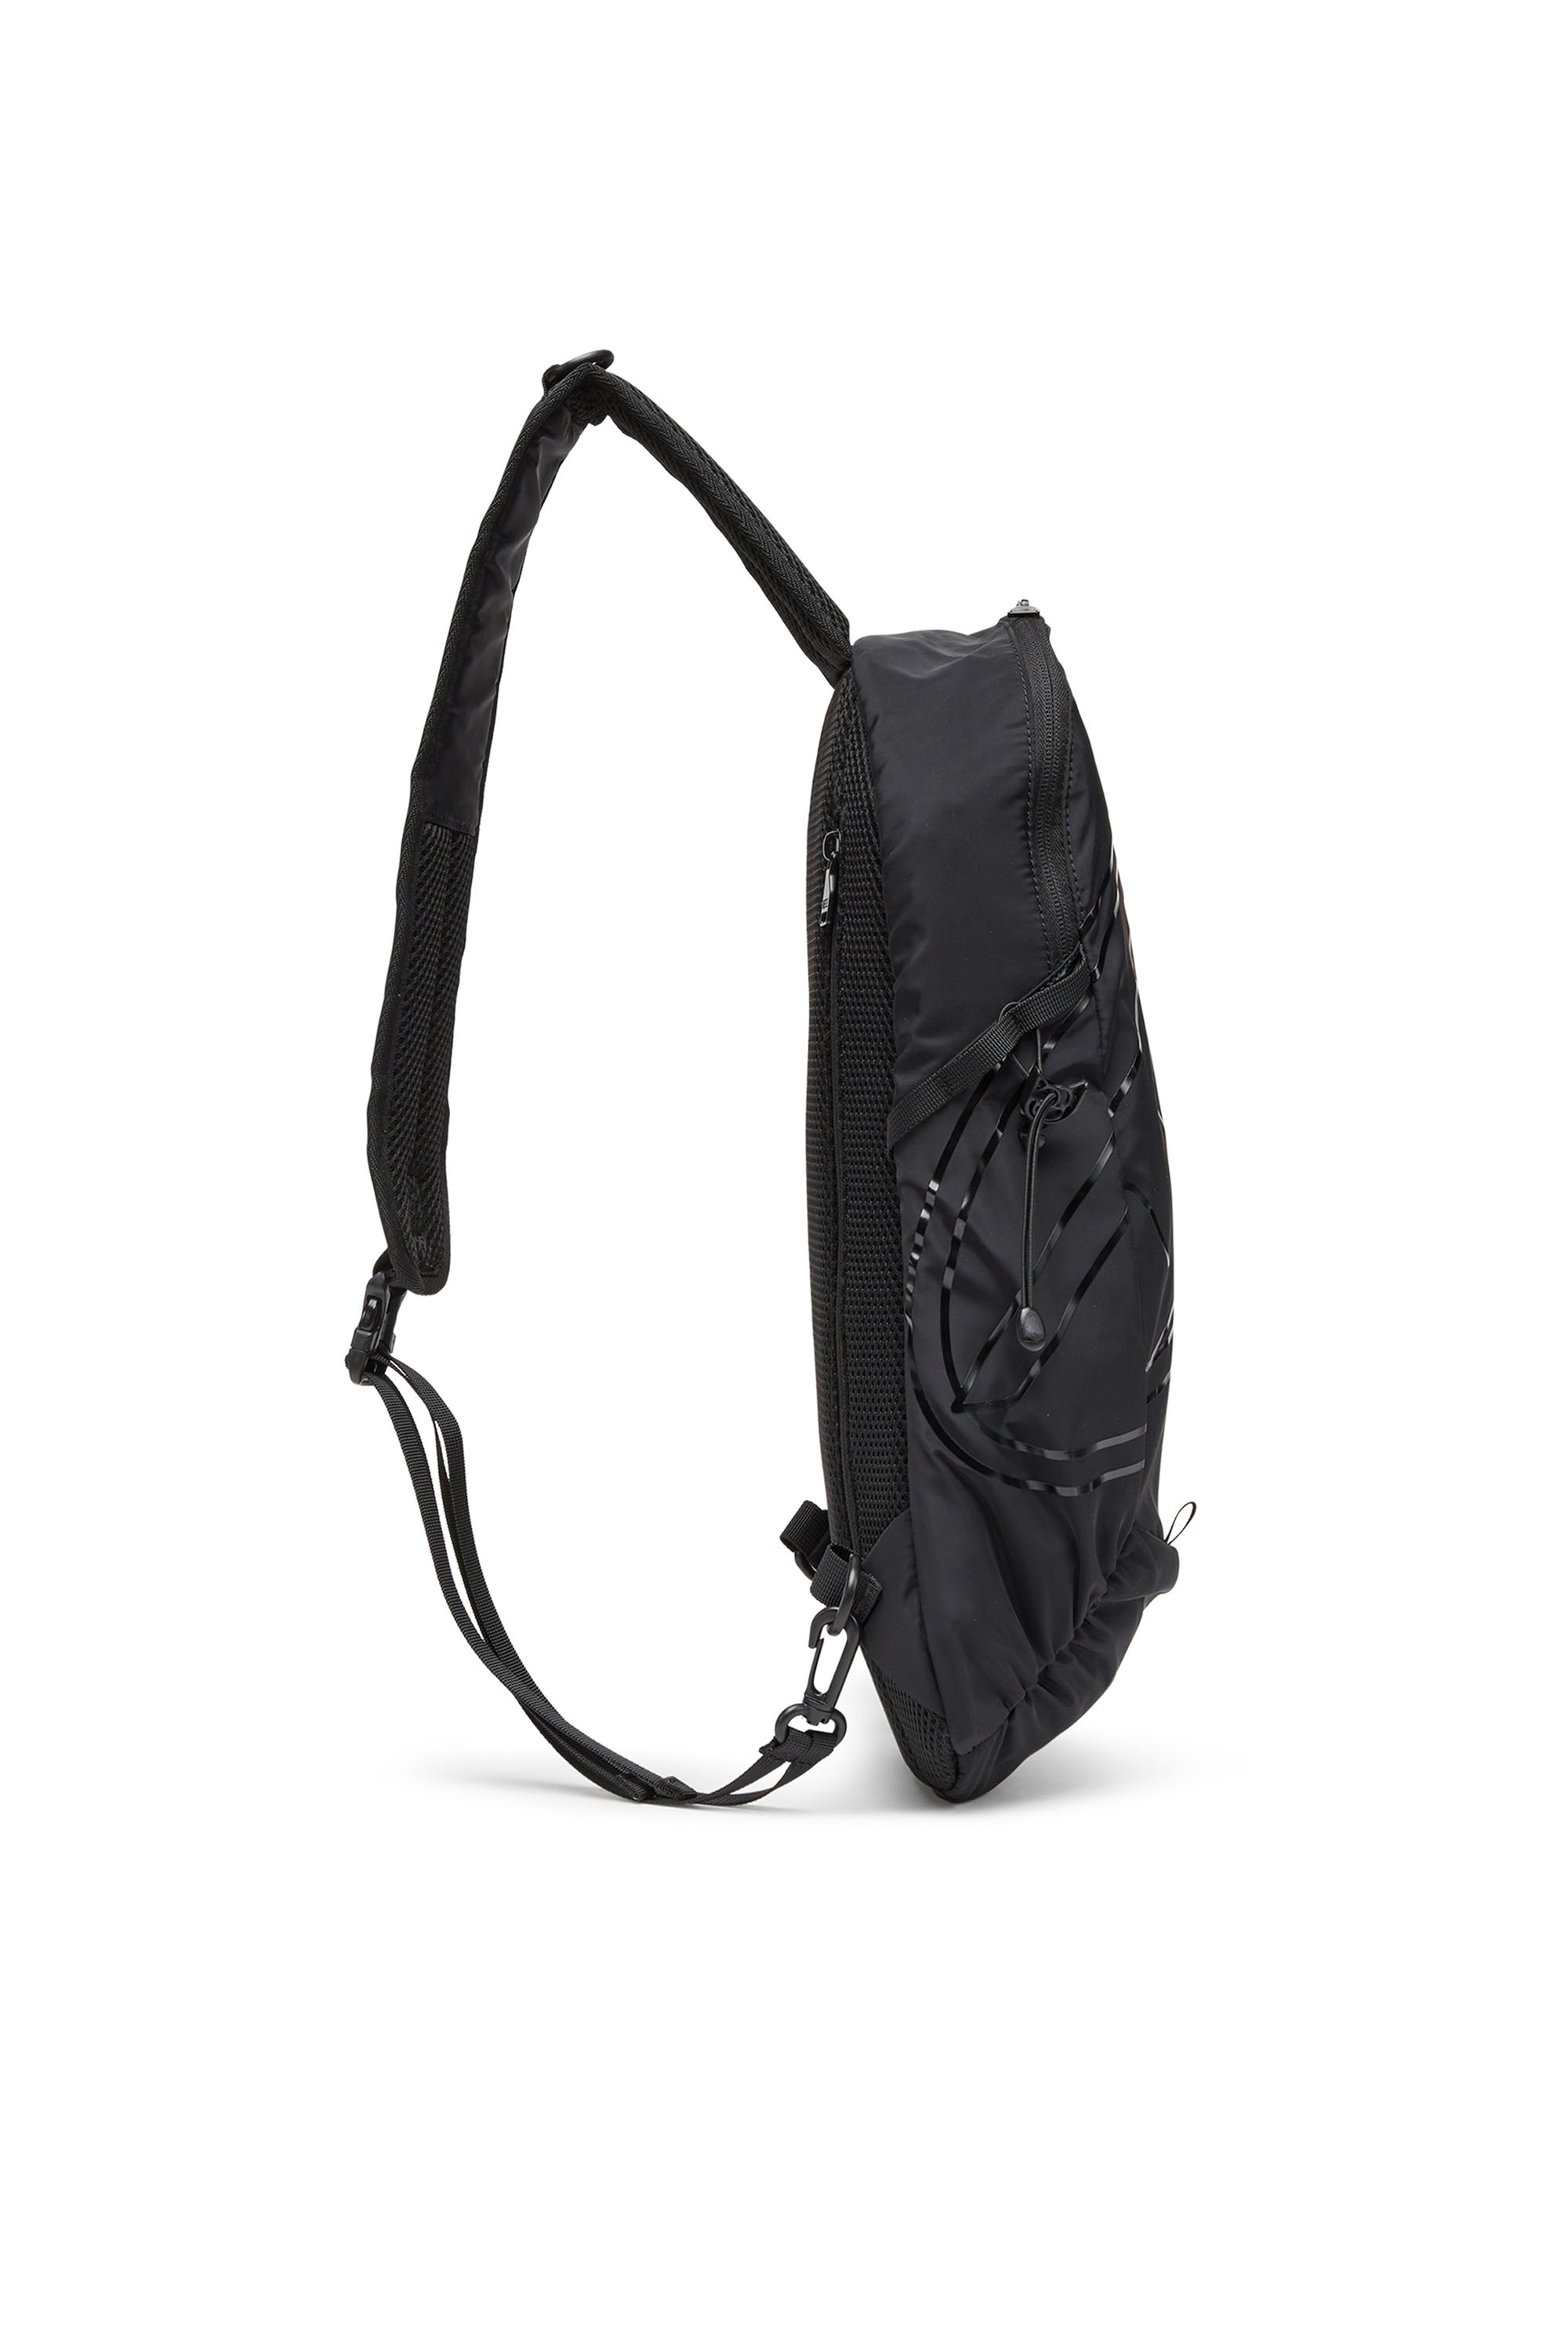 Diesel side pockets BISIE backpack with zip closure men - Glamood Outlet